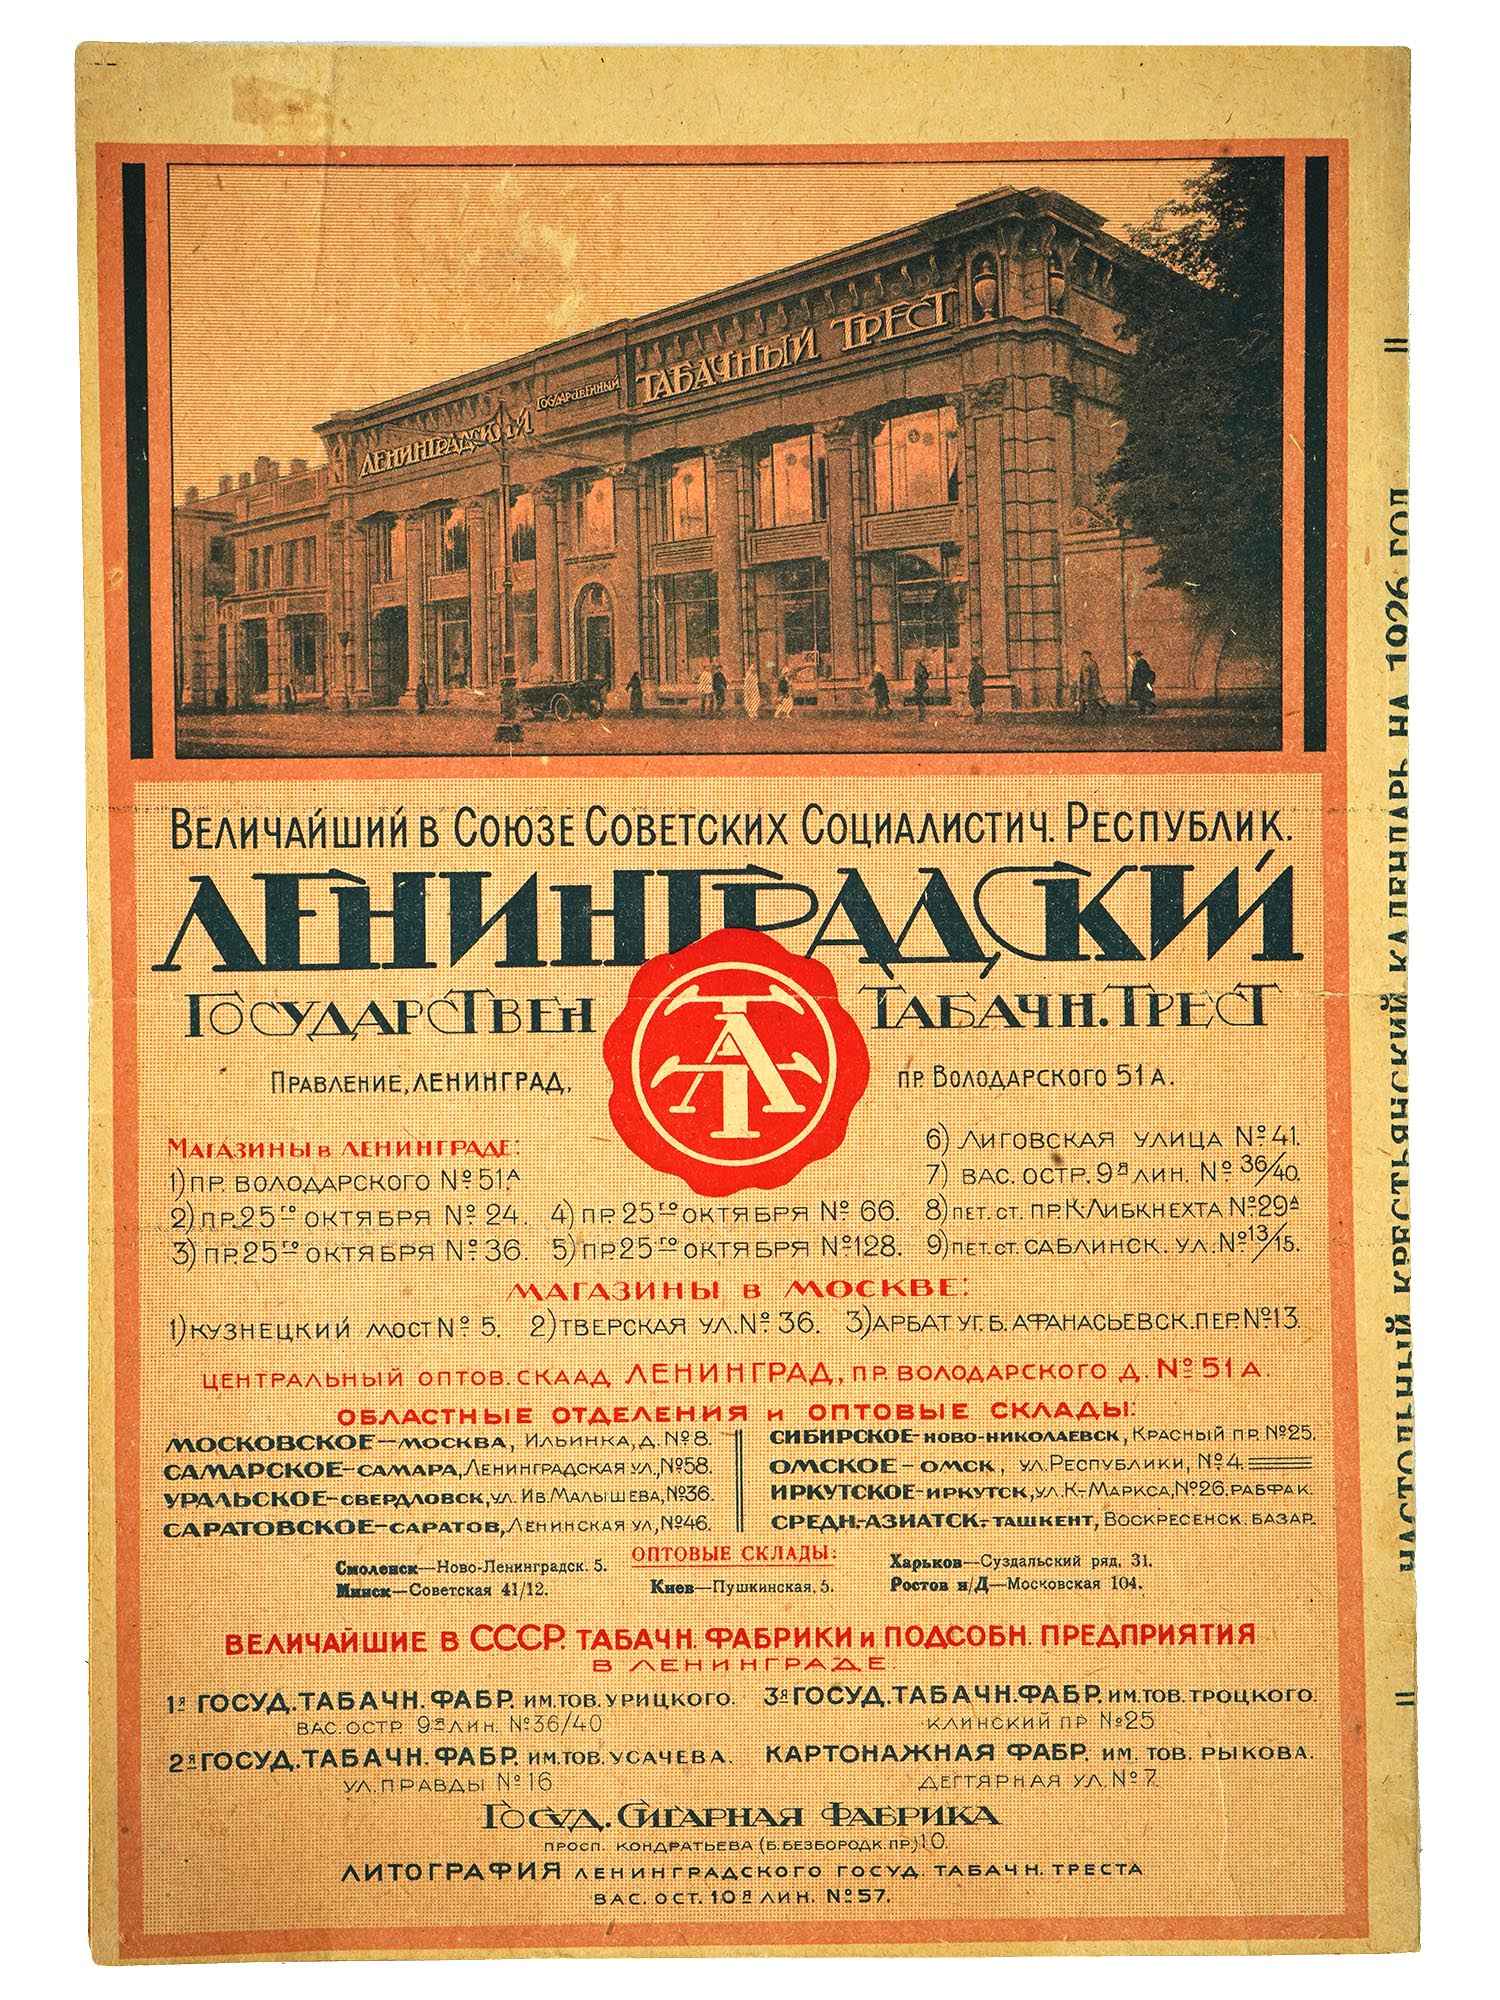 1926 RUSSIAN SOVET ERA POSTER FROM THE DESK CALENDAR PIC-1